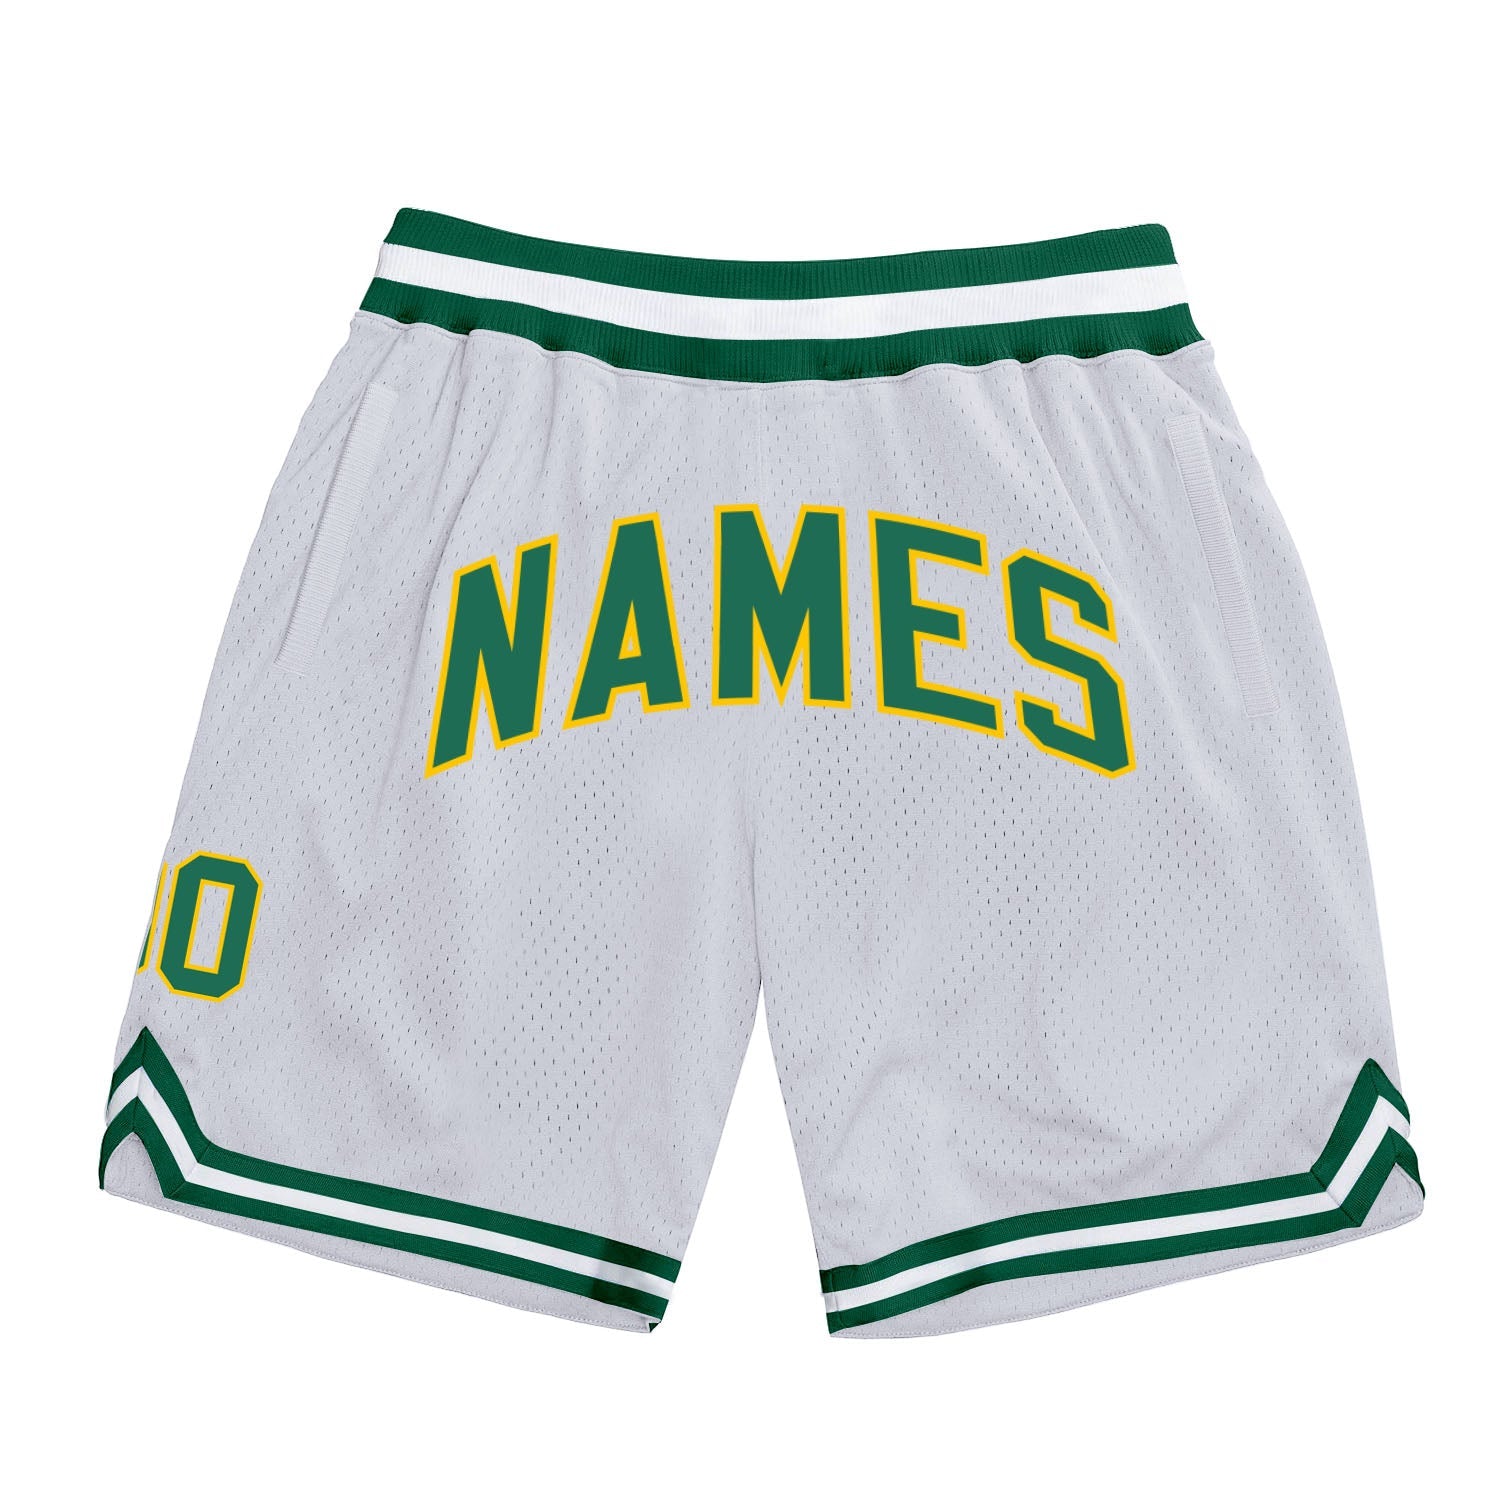 Shorts de basquete autênticos de reminiscência branco Kelly verde-ouro branco personalizado